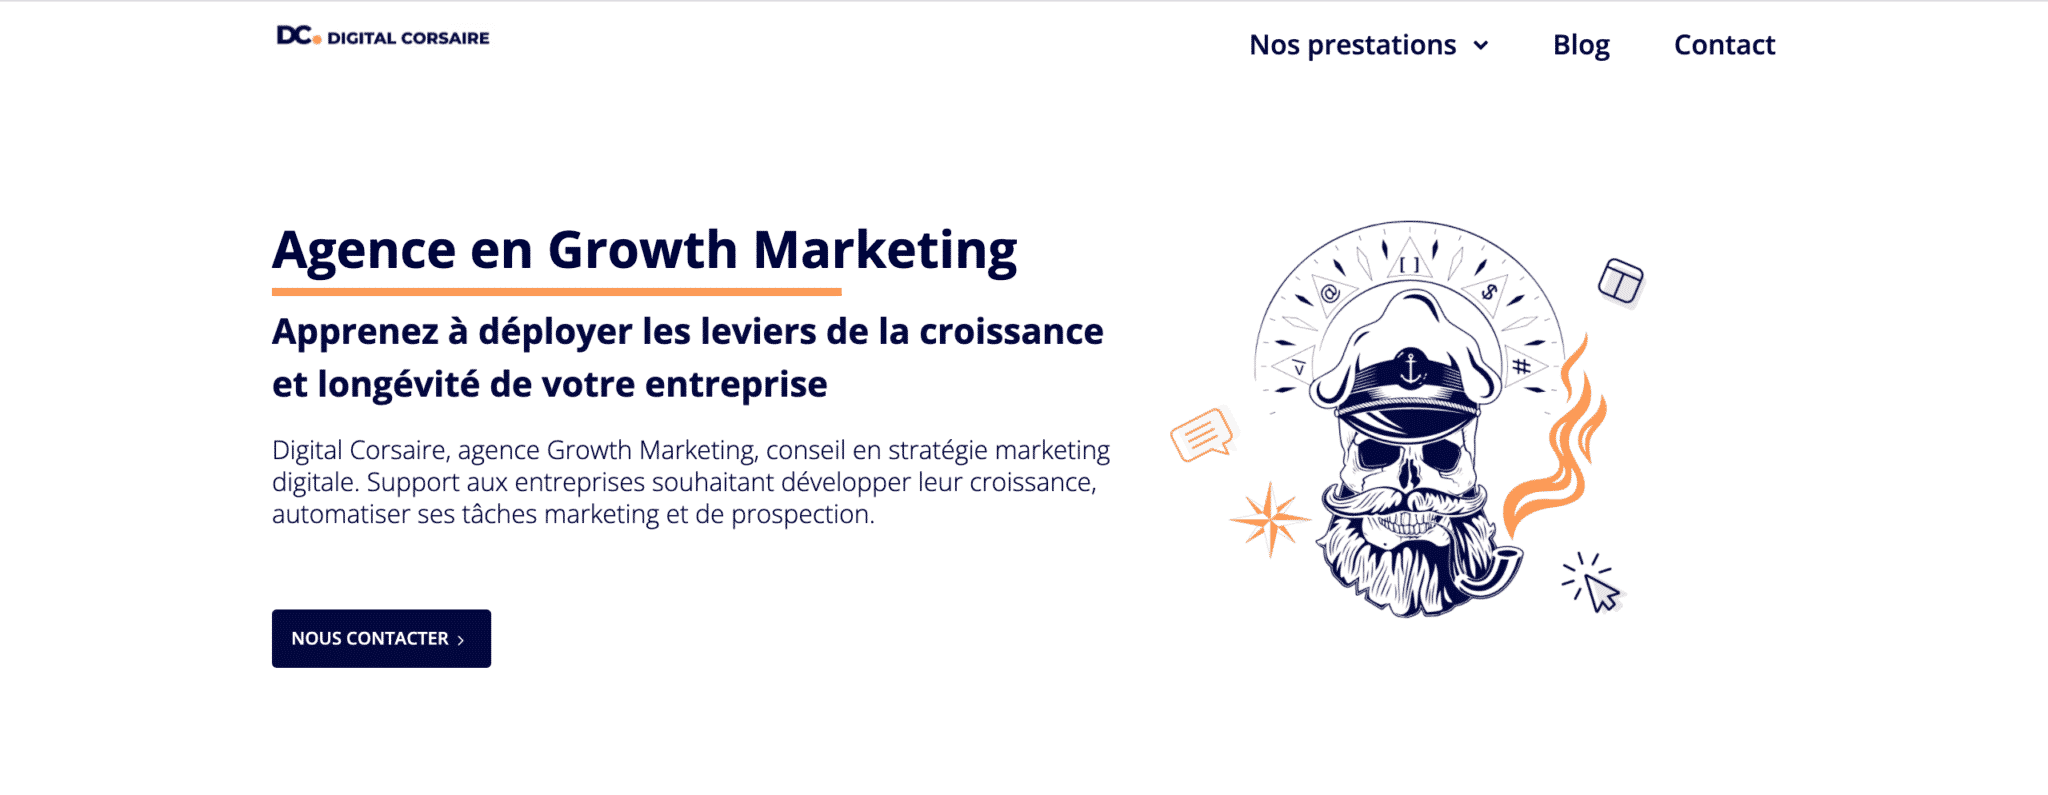 agences-growth-marketing-digital-corsaire